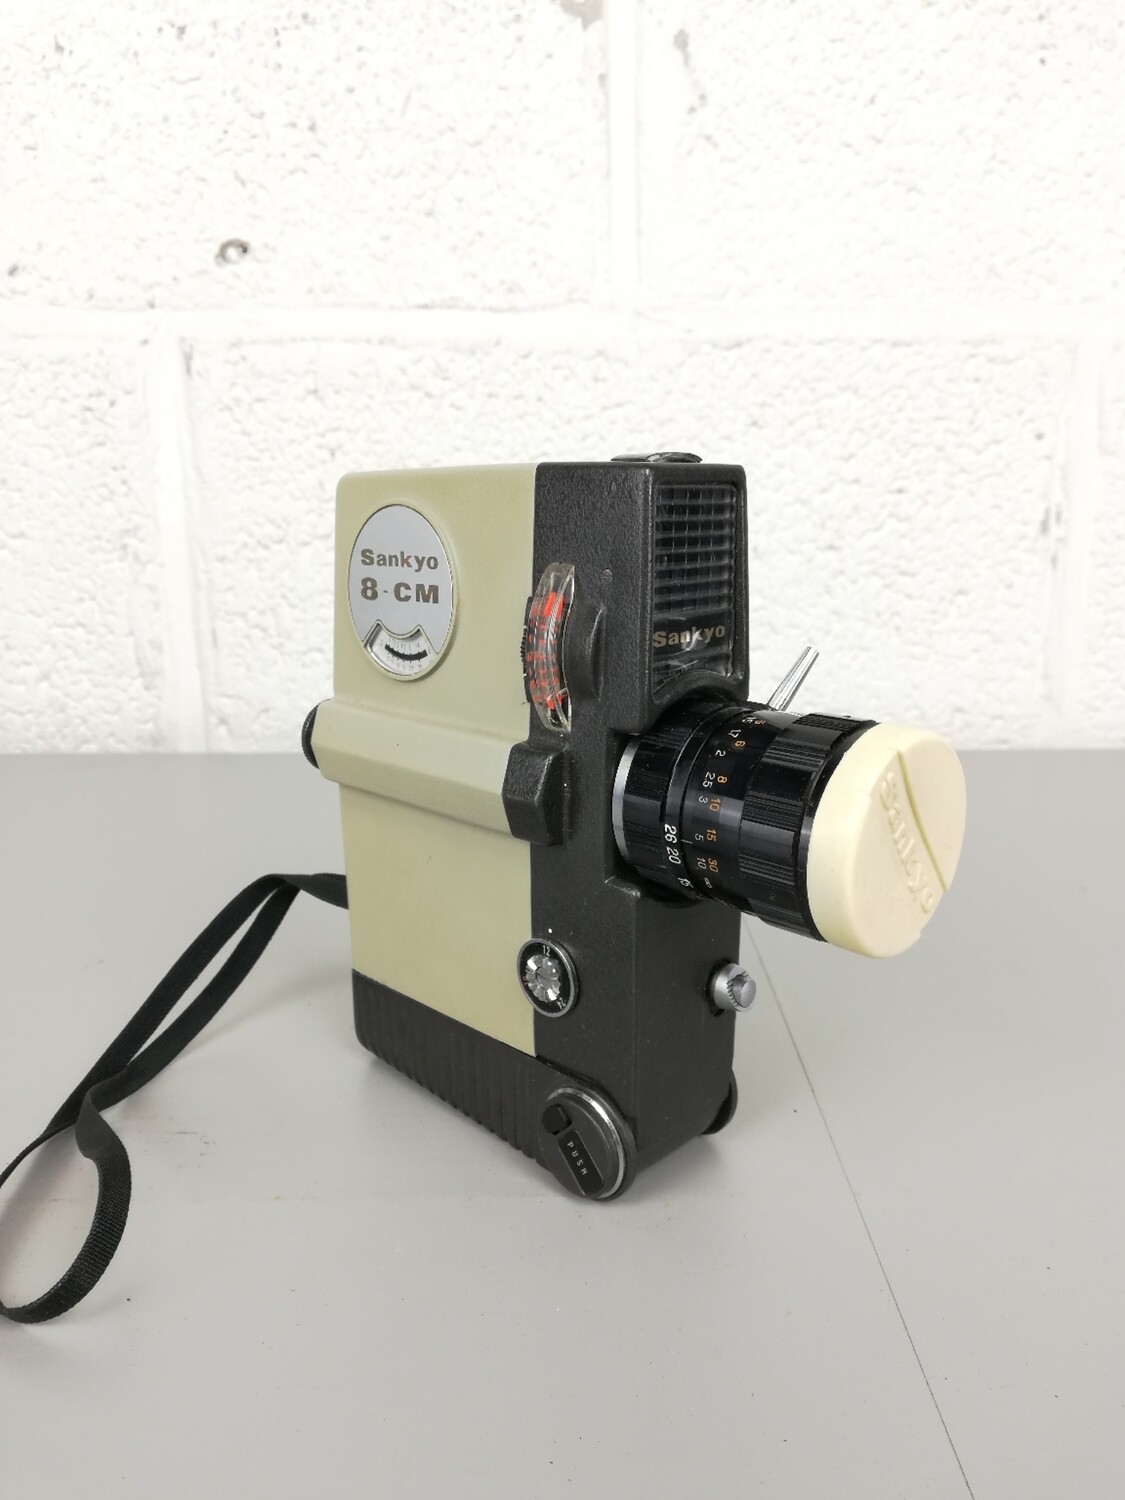 Sankyo 8-CM film camera